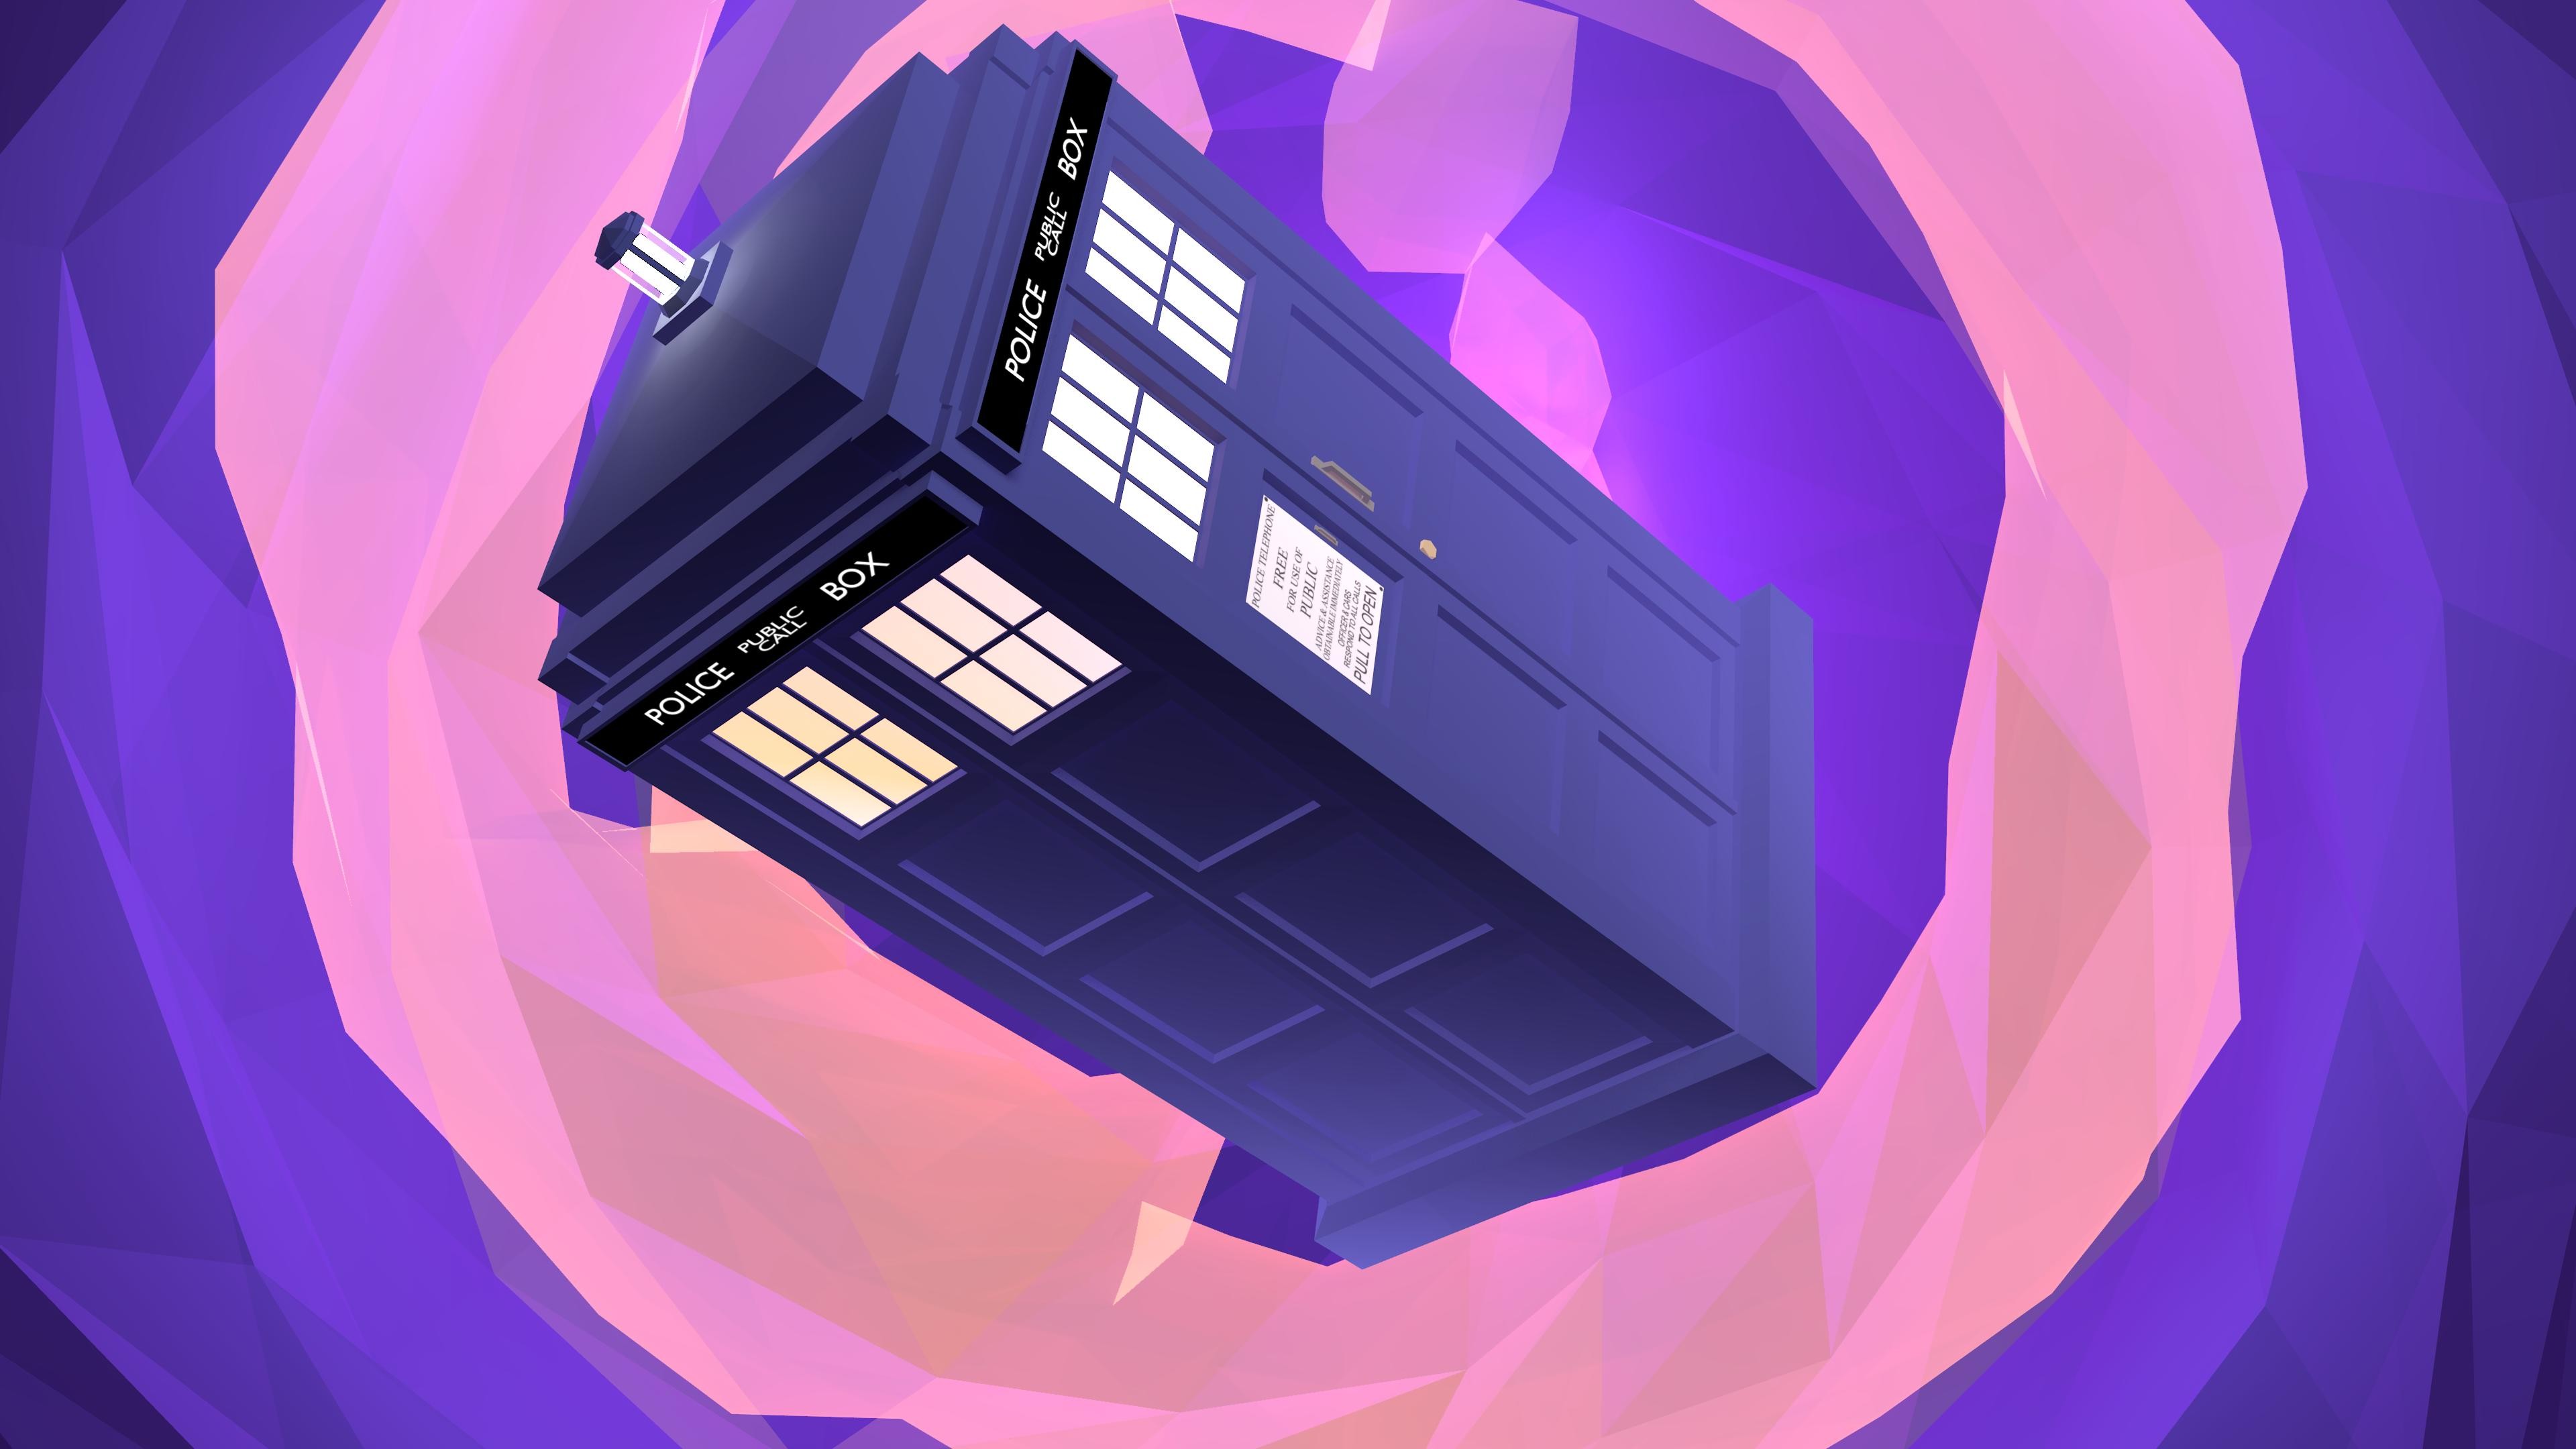 General 3840x2160 Doctor Who TARDIS artwork digital art purple TV series science fiction